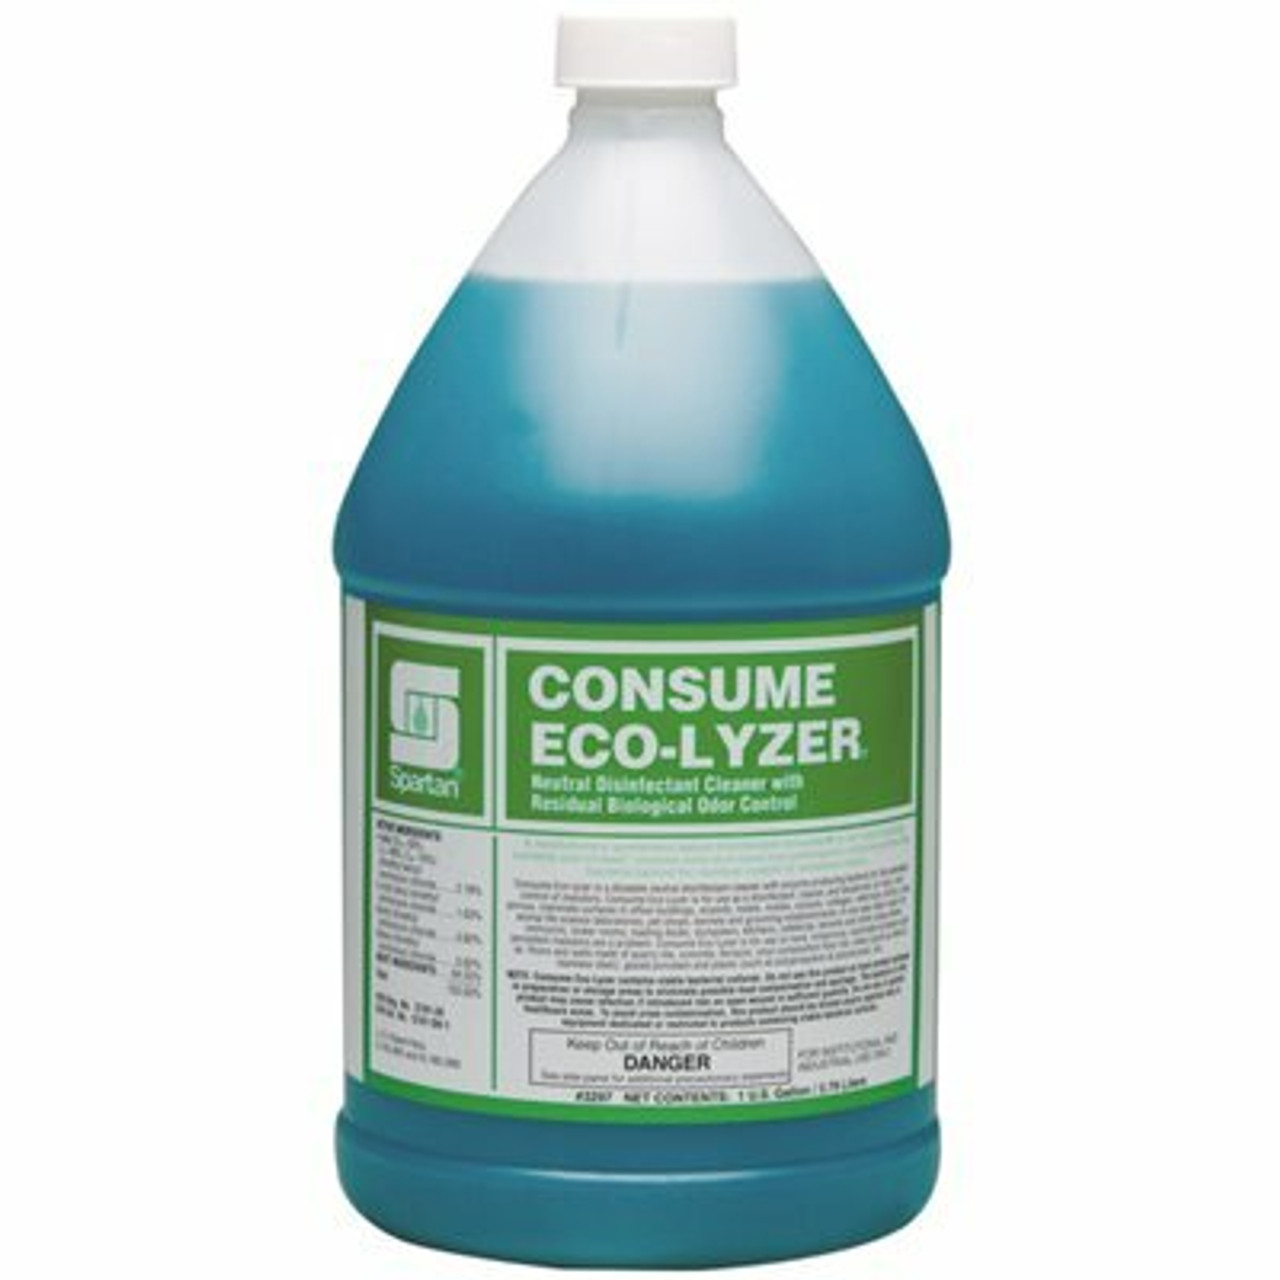 Spartan Chemical Consume Eco-Lyzer 1 Gallon Floral Scent Disinfectant/Deodorant